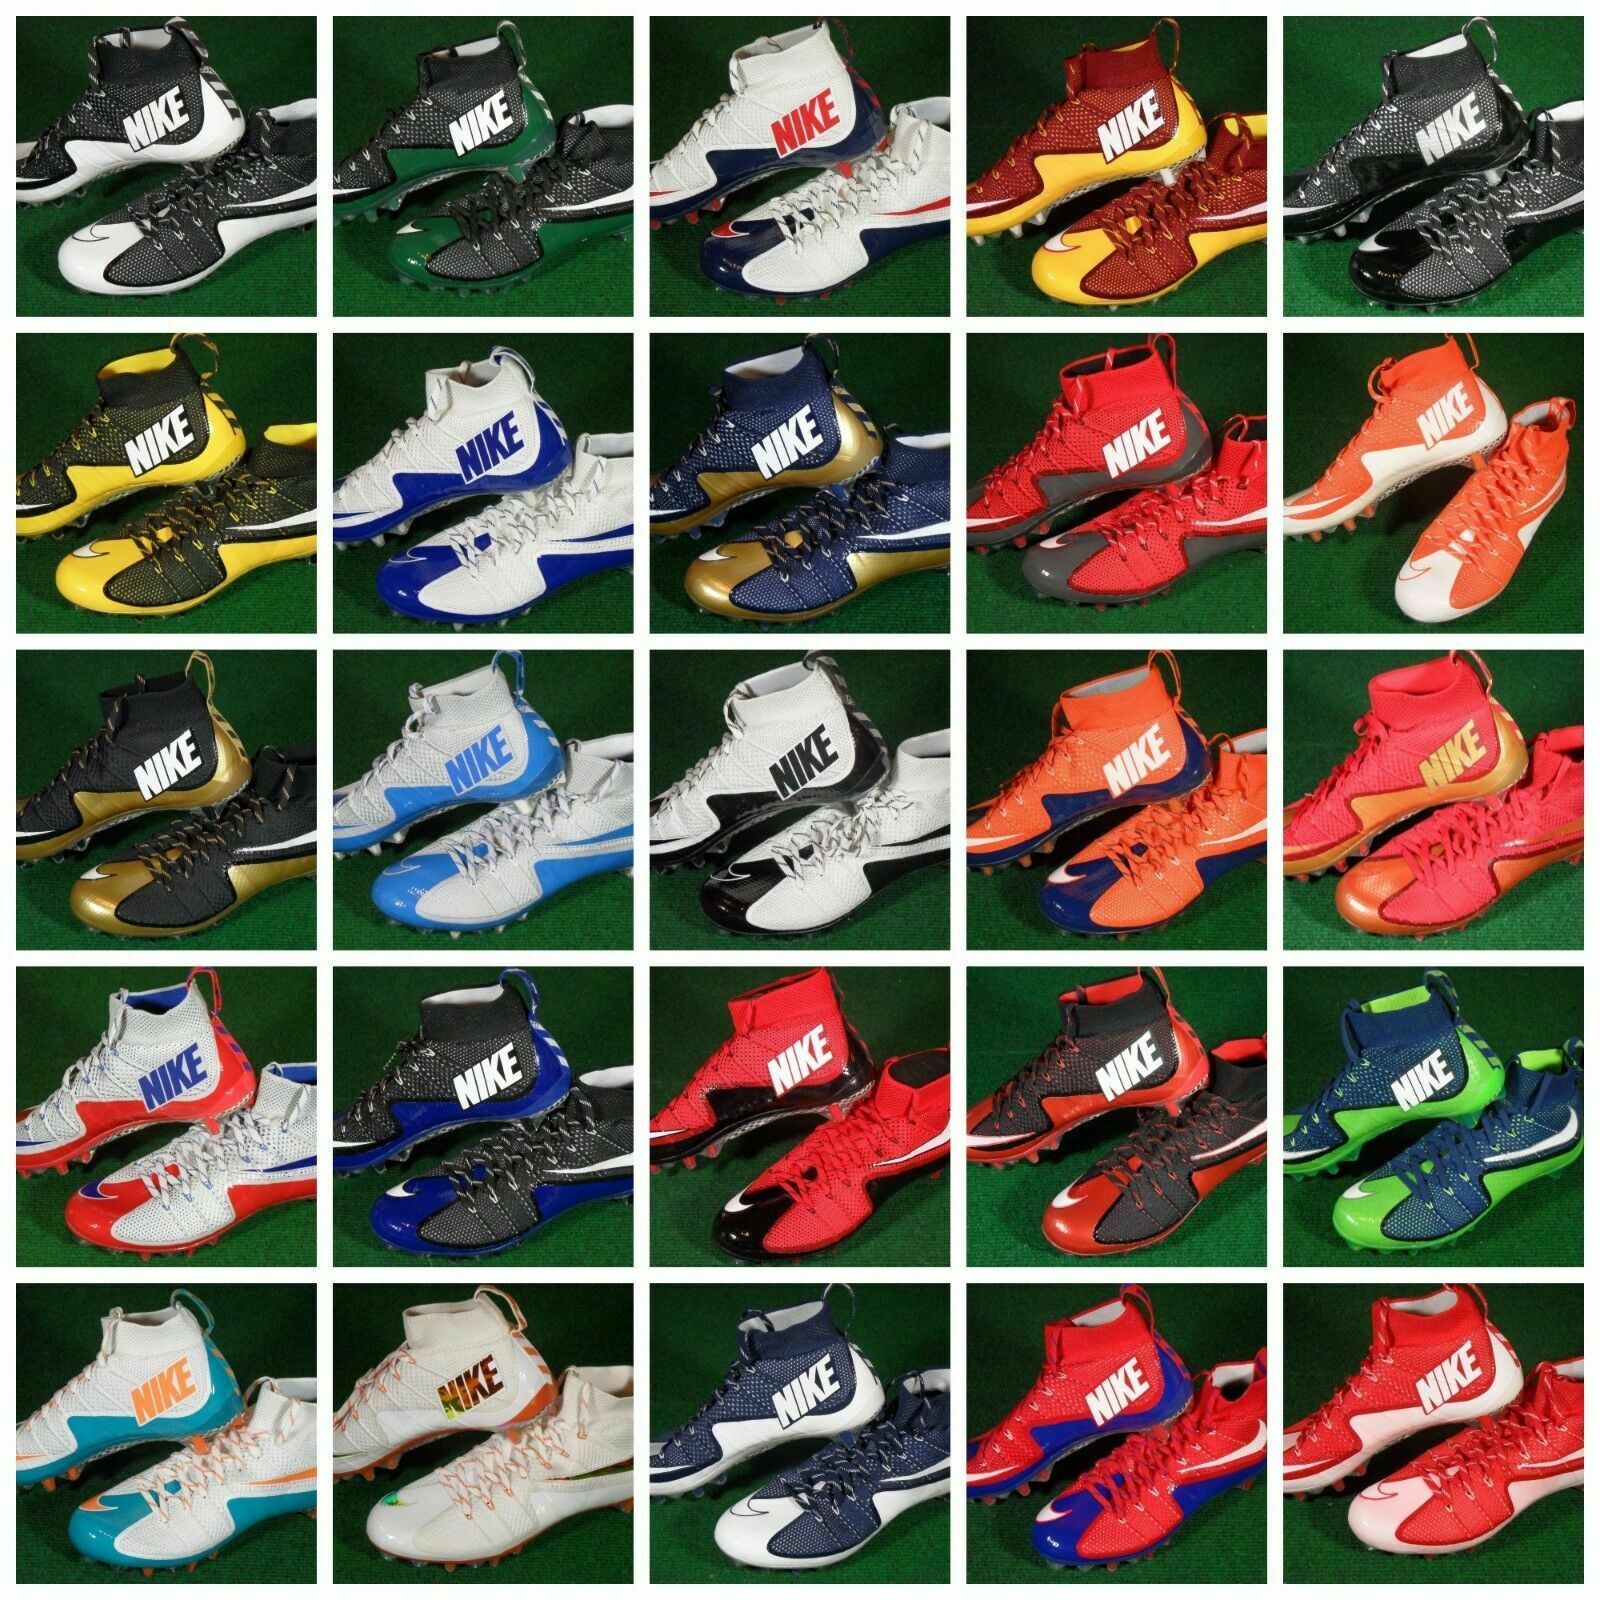 New Mens Nike Vapor Untouchable Td Football Cleats Nfl Pf Colors Sizes Original